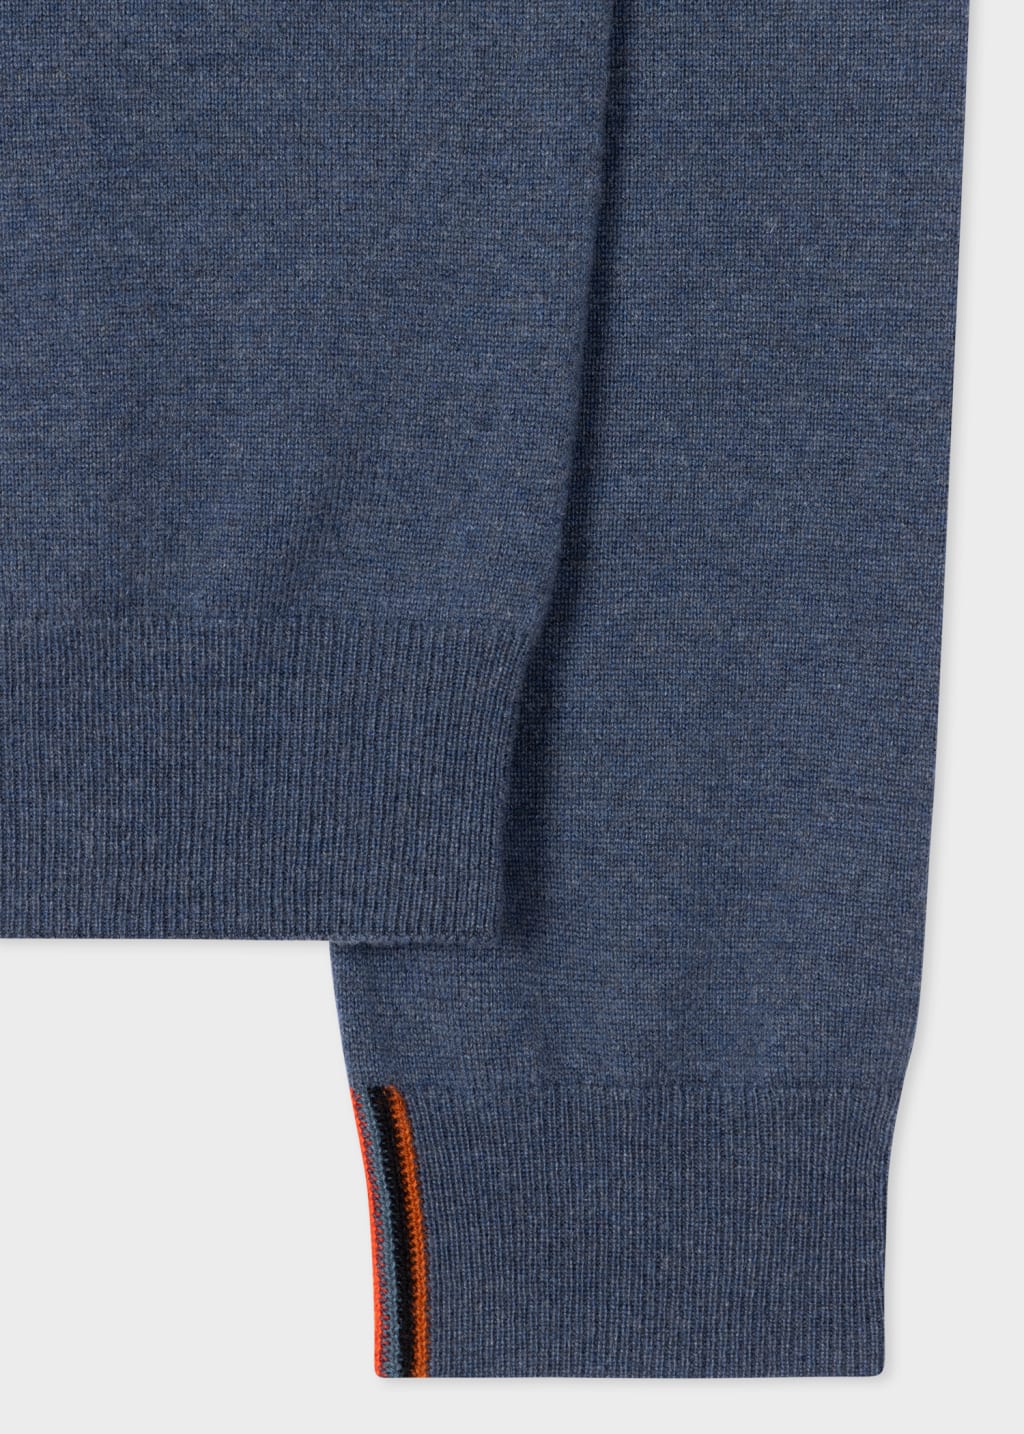 Men's Slate Blue Cashmere Zip-Neck Sweater